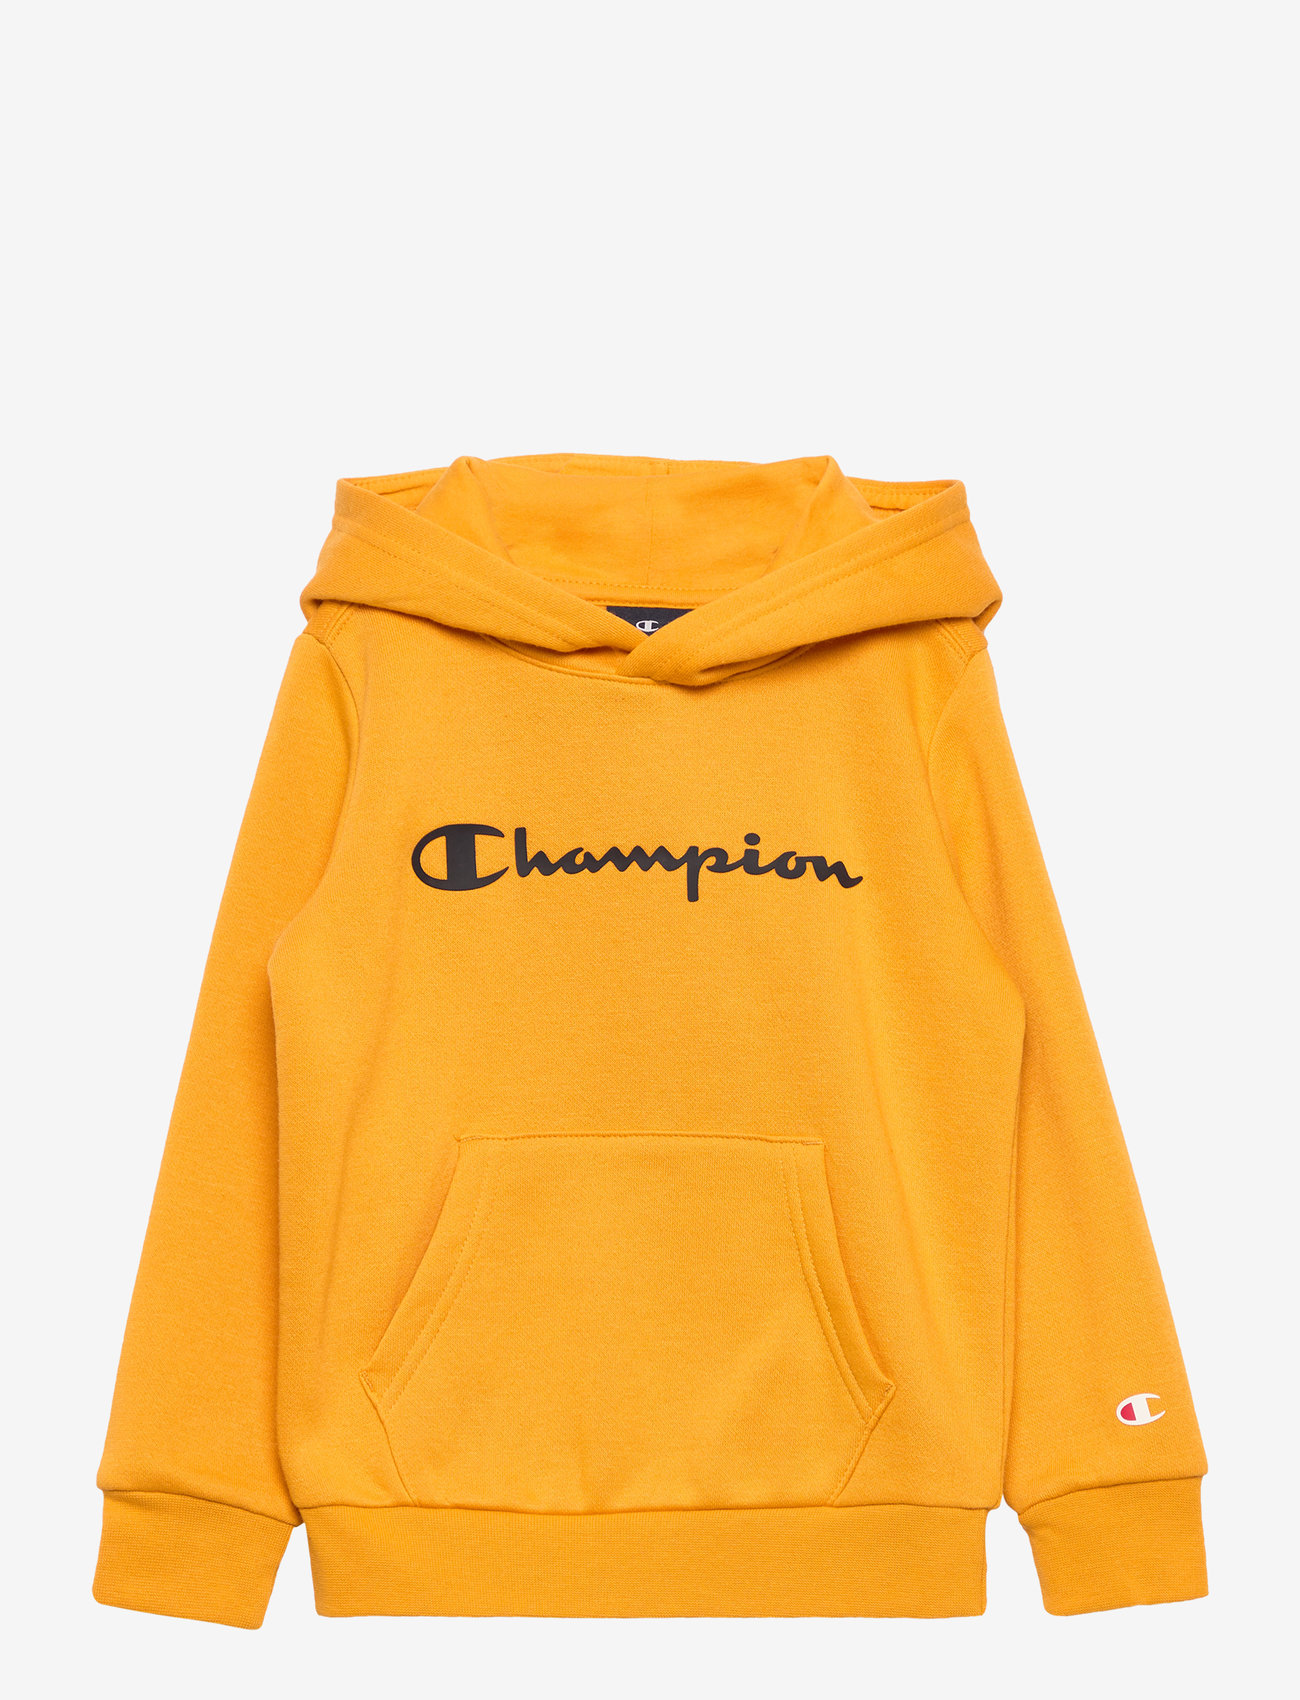 champion sweatshirt light yellow